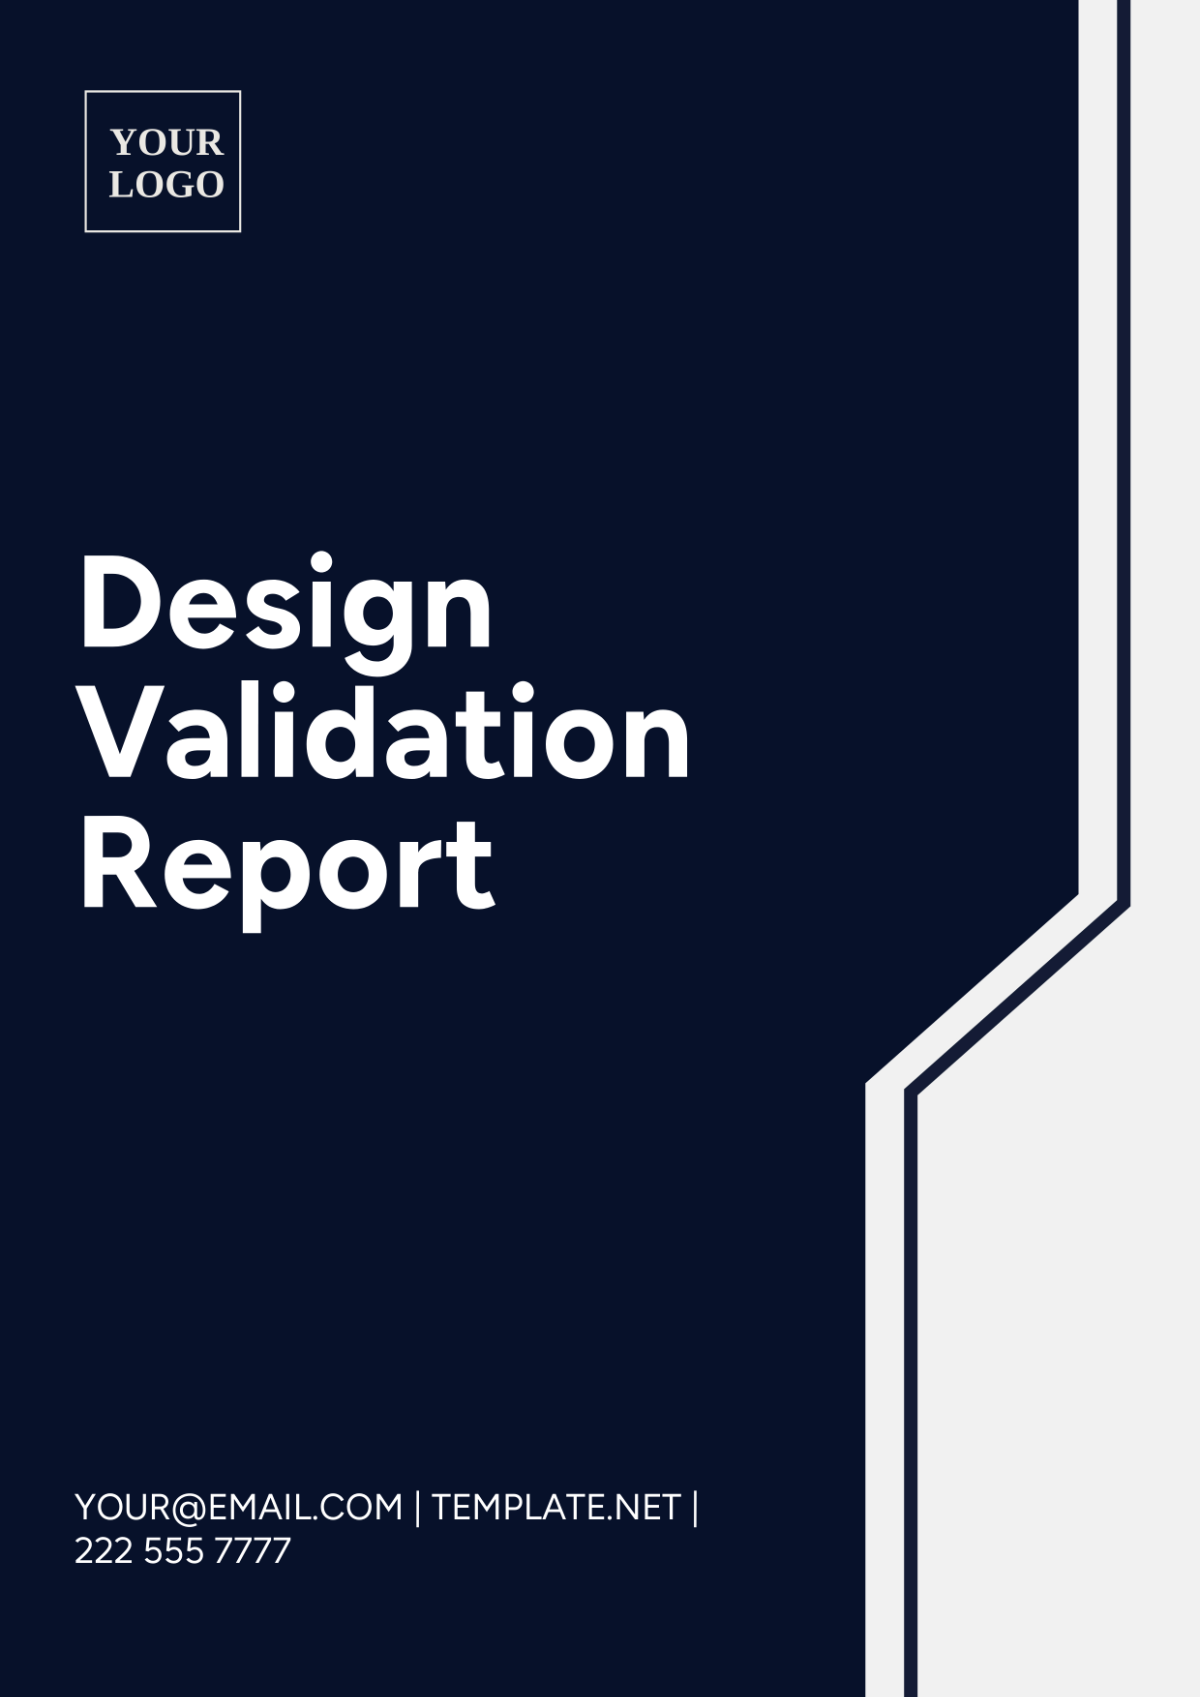 Design Validation Report Template